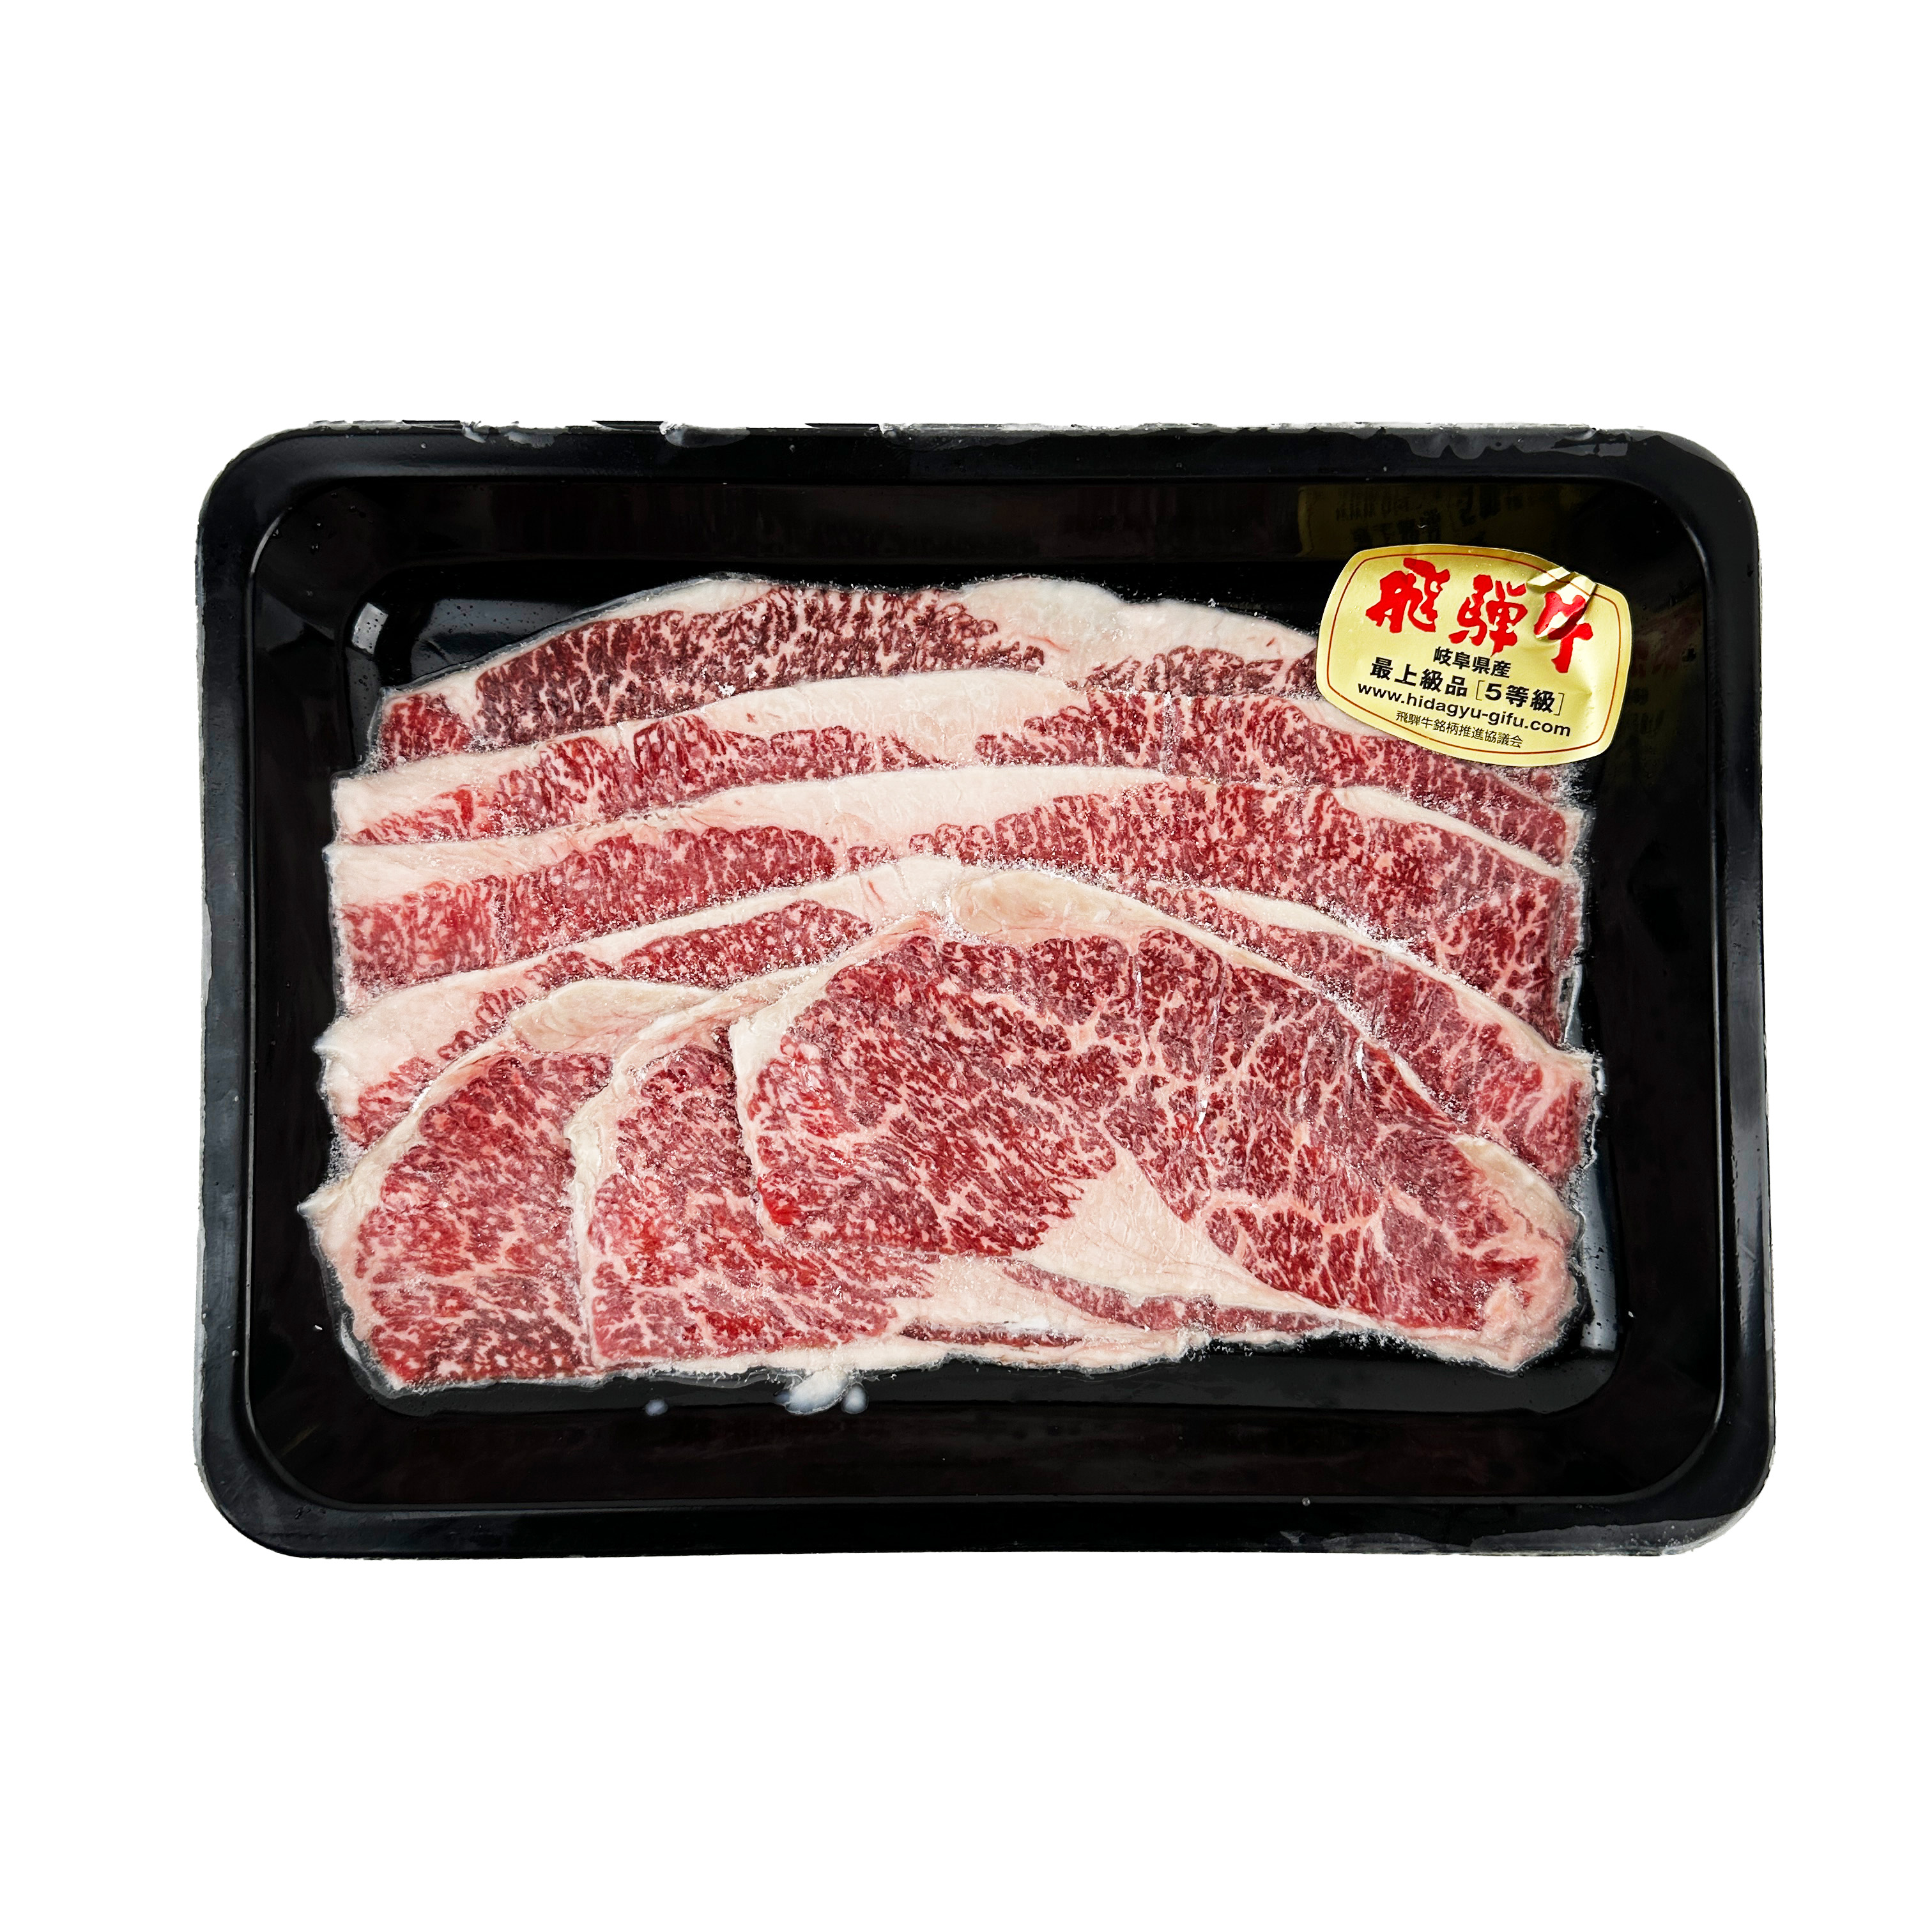 Hida Premium A5 Wagyu Beef Brisket Slice 150g-eBest-Beef,Meat deli & eggs